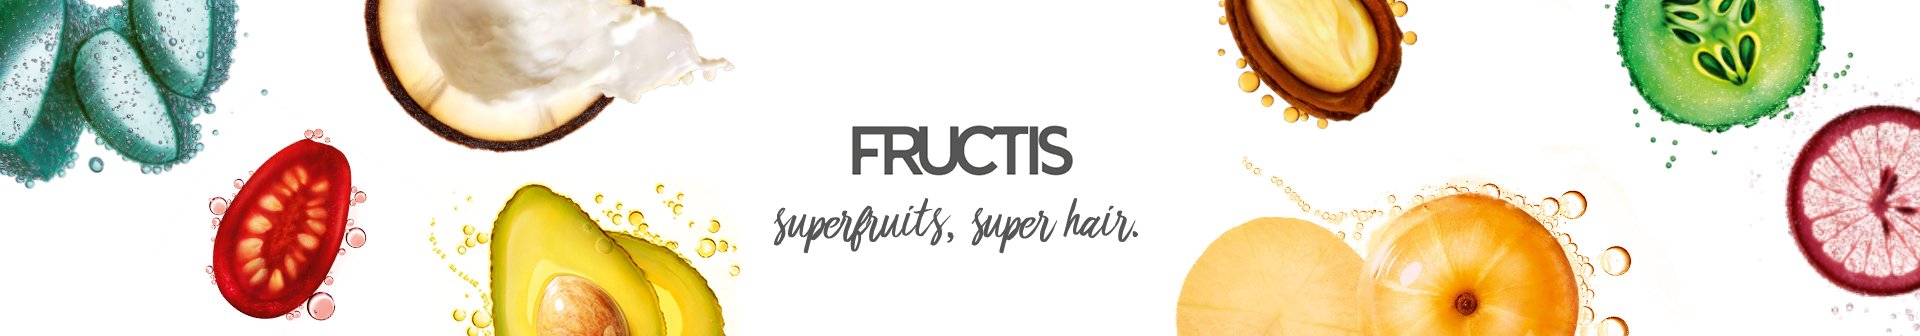 Fructis Superfruits